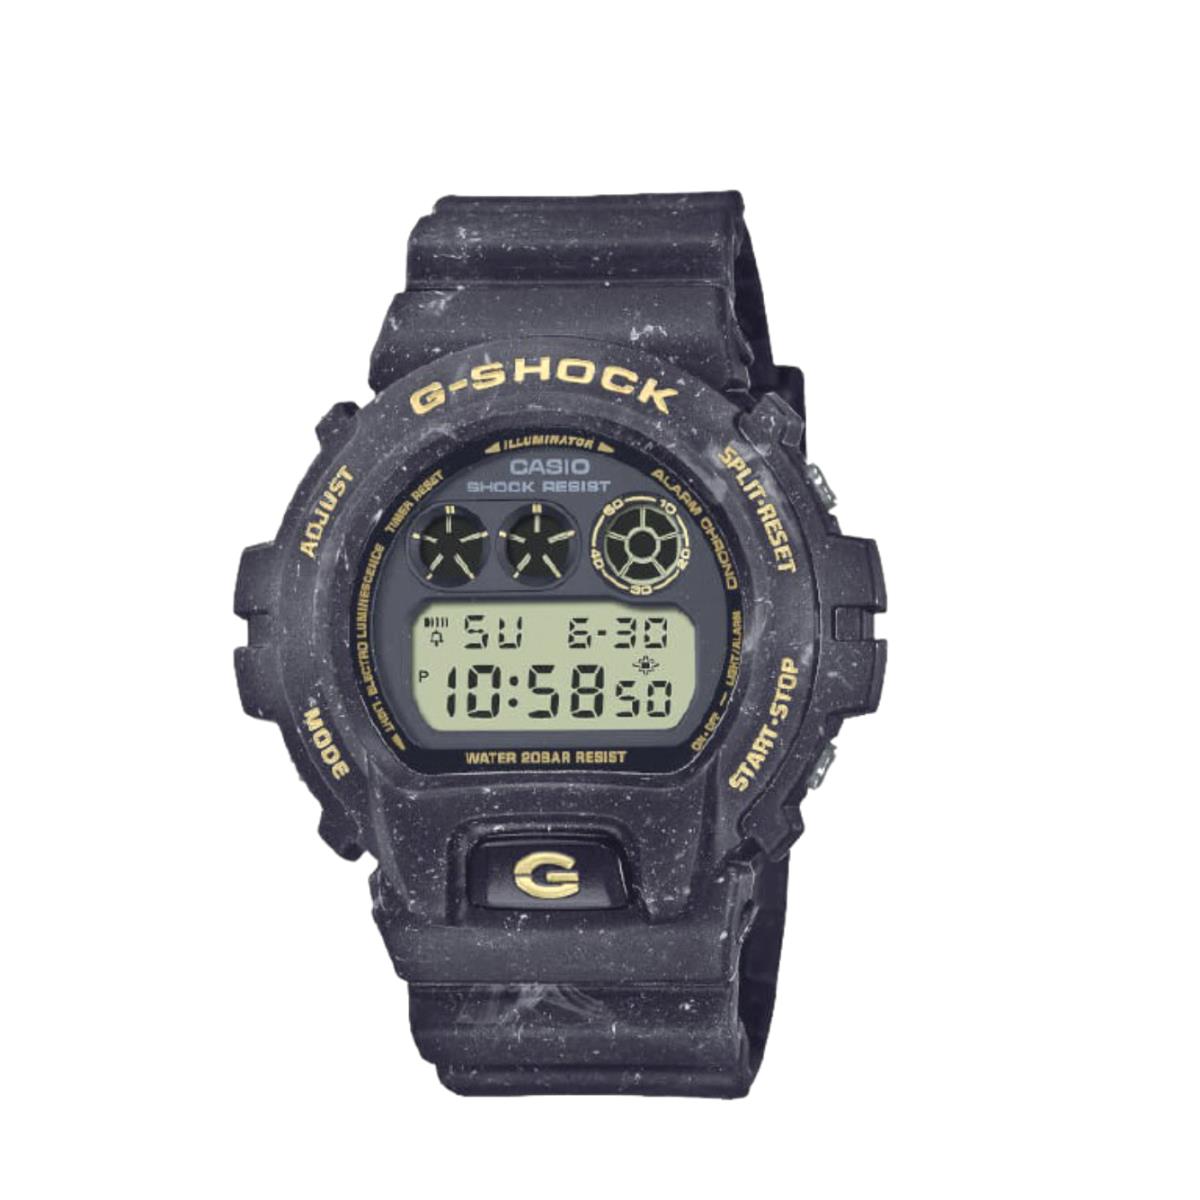 Casio G-shock DW-6900WS-1 Classic 3 Eye Ocean Wave Limited Quartz Men`s Watch - Dial: Black, Band: Blue, Bezel: Blue